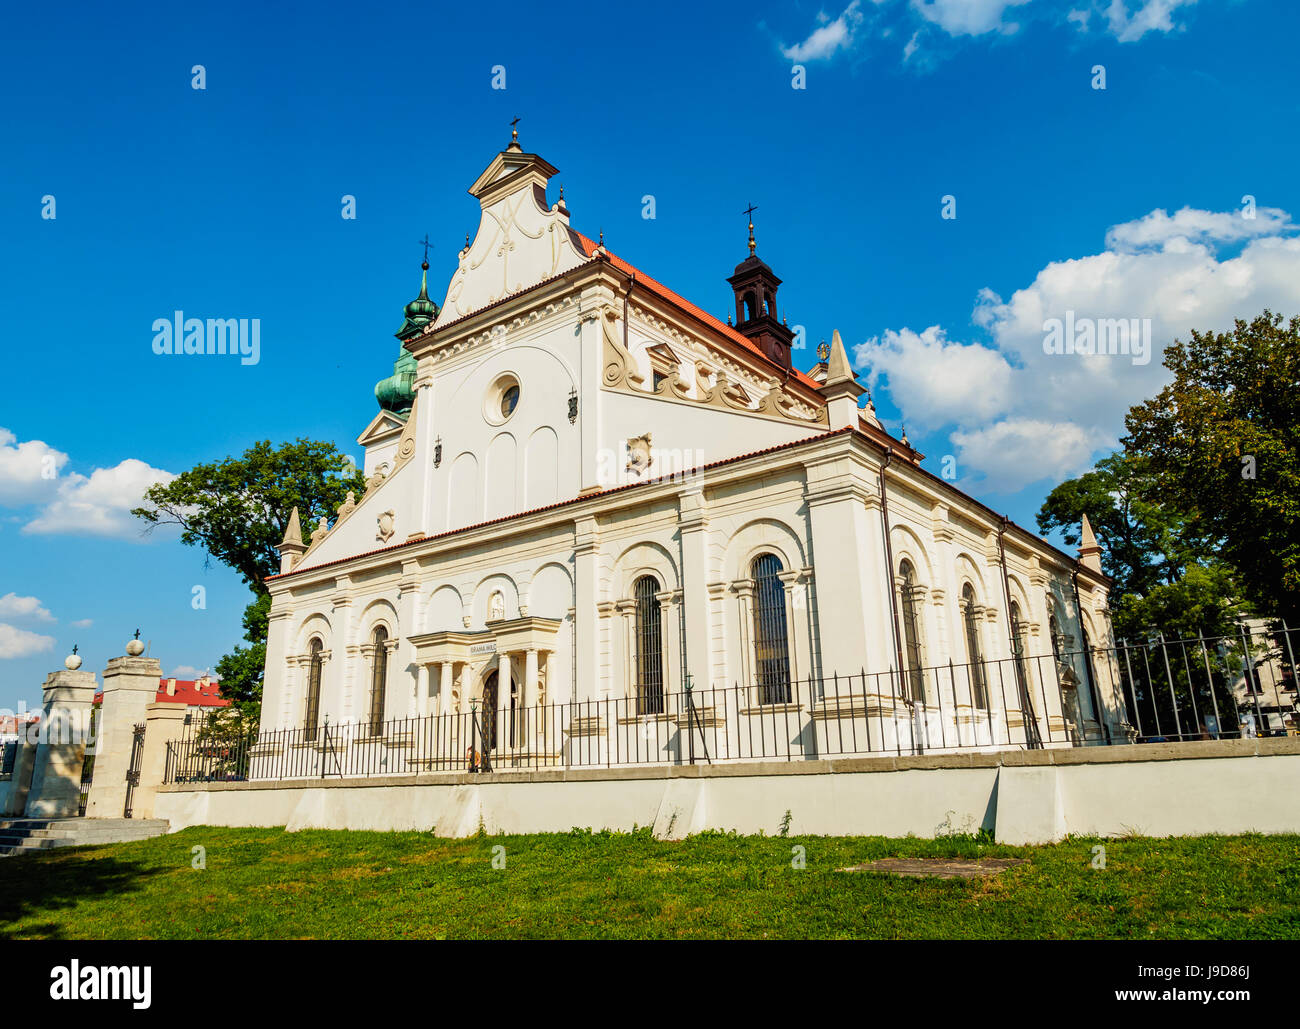 Cathedral, Old Town, UNESCO World Heritage Site, Zamosc, Lublin Voivodeship, Poland, Europe Stock Photo